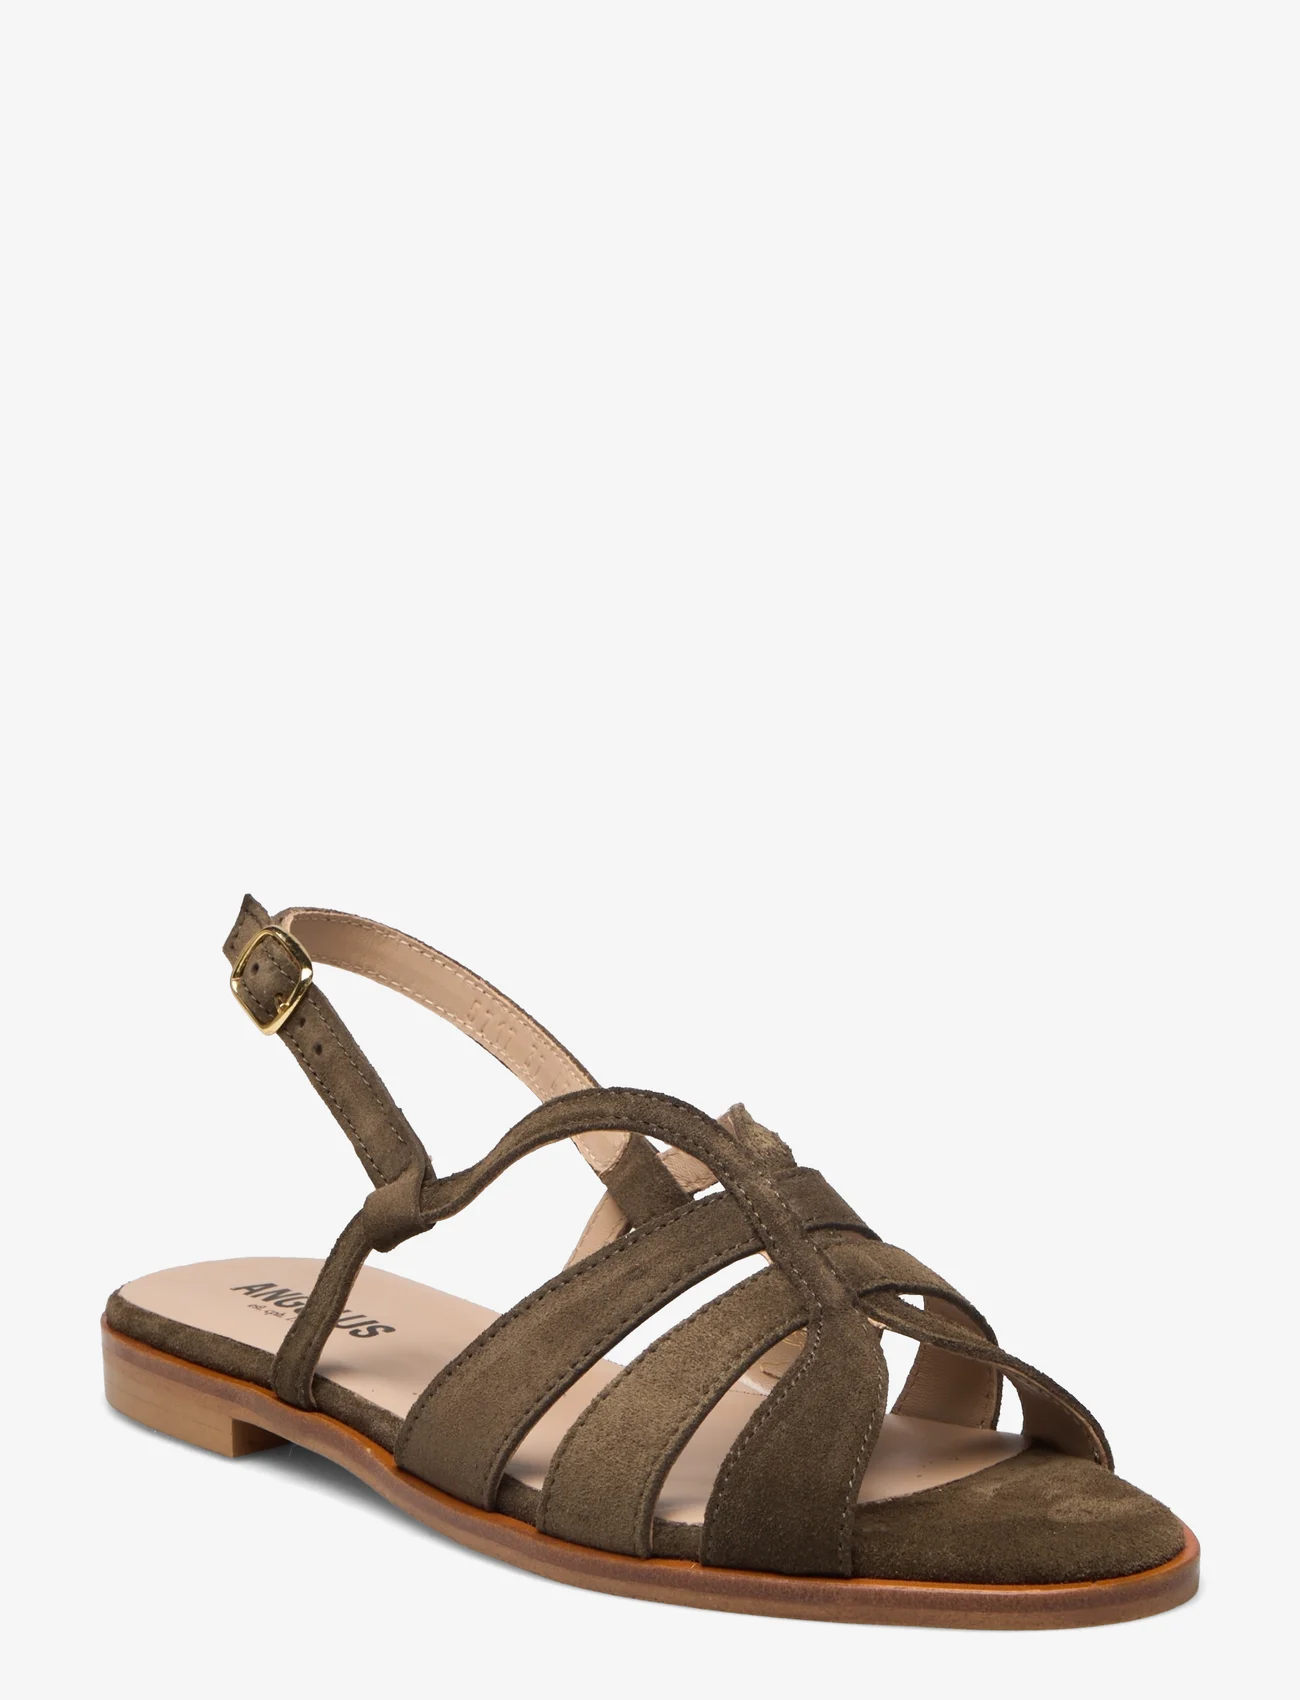 ANGULUS - Sandals - flat - open toe - op - flat sandals - 2214 dark olive - 0